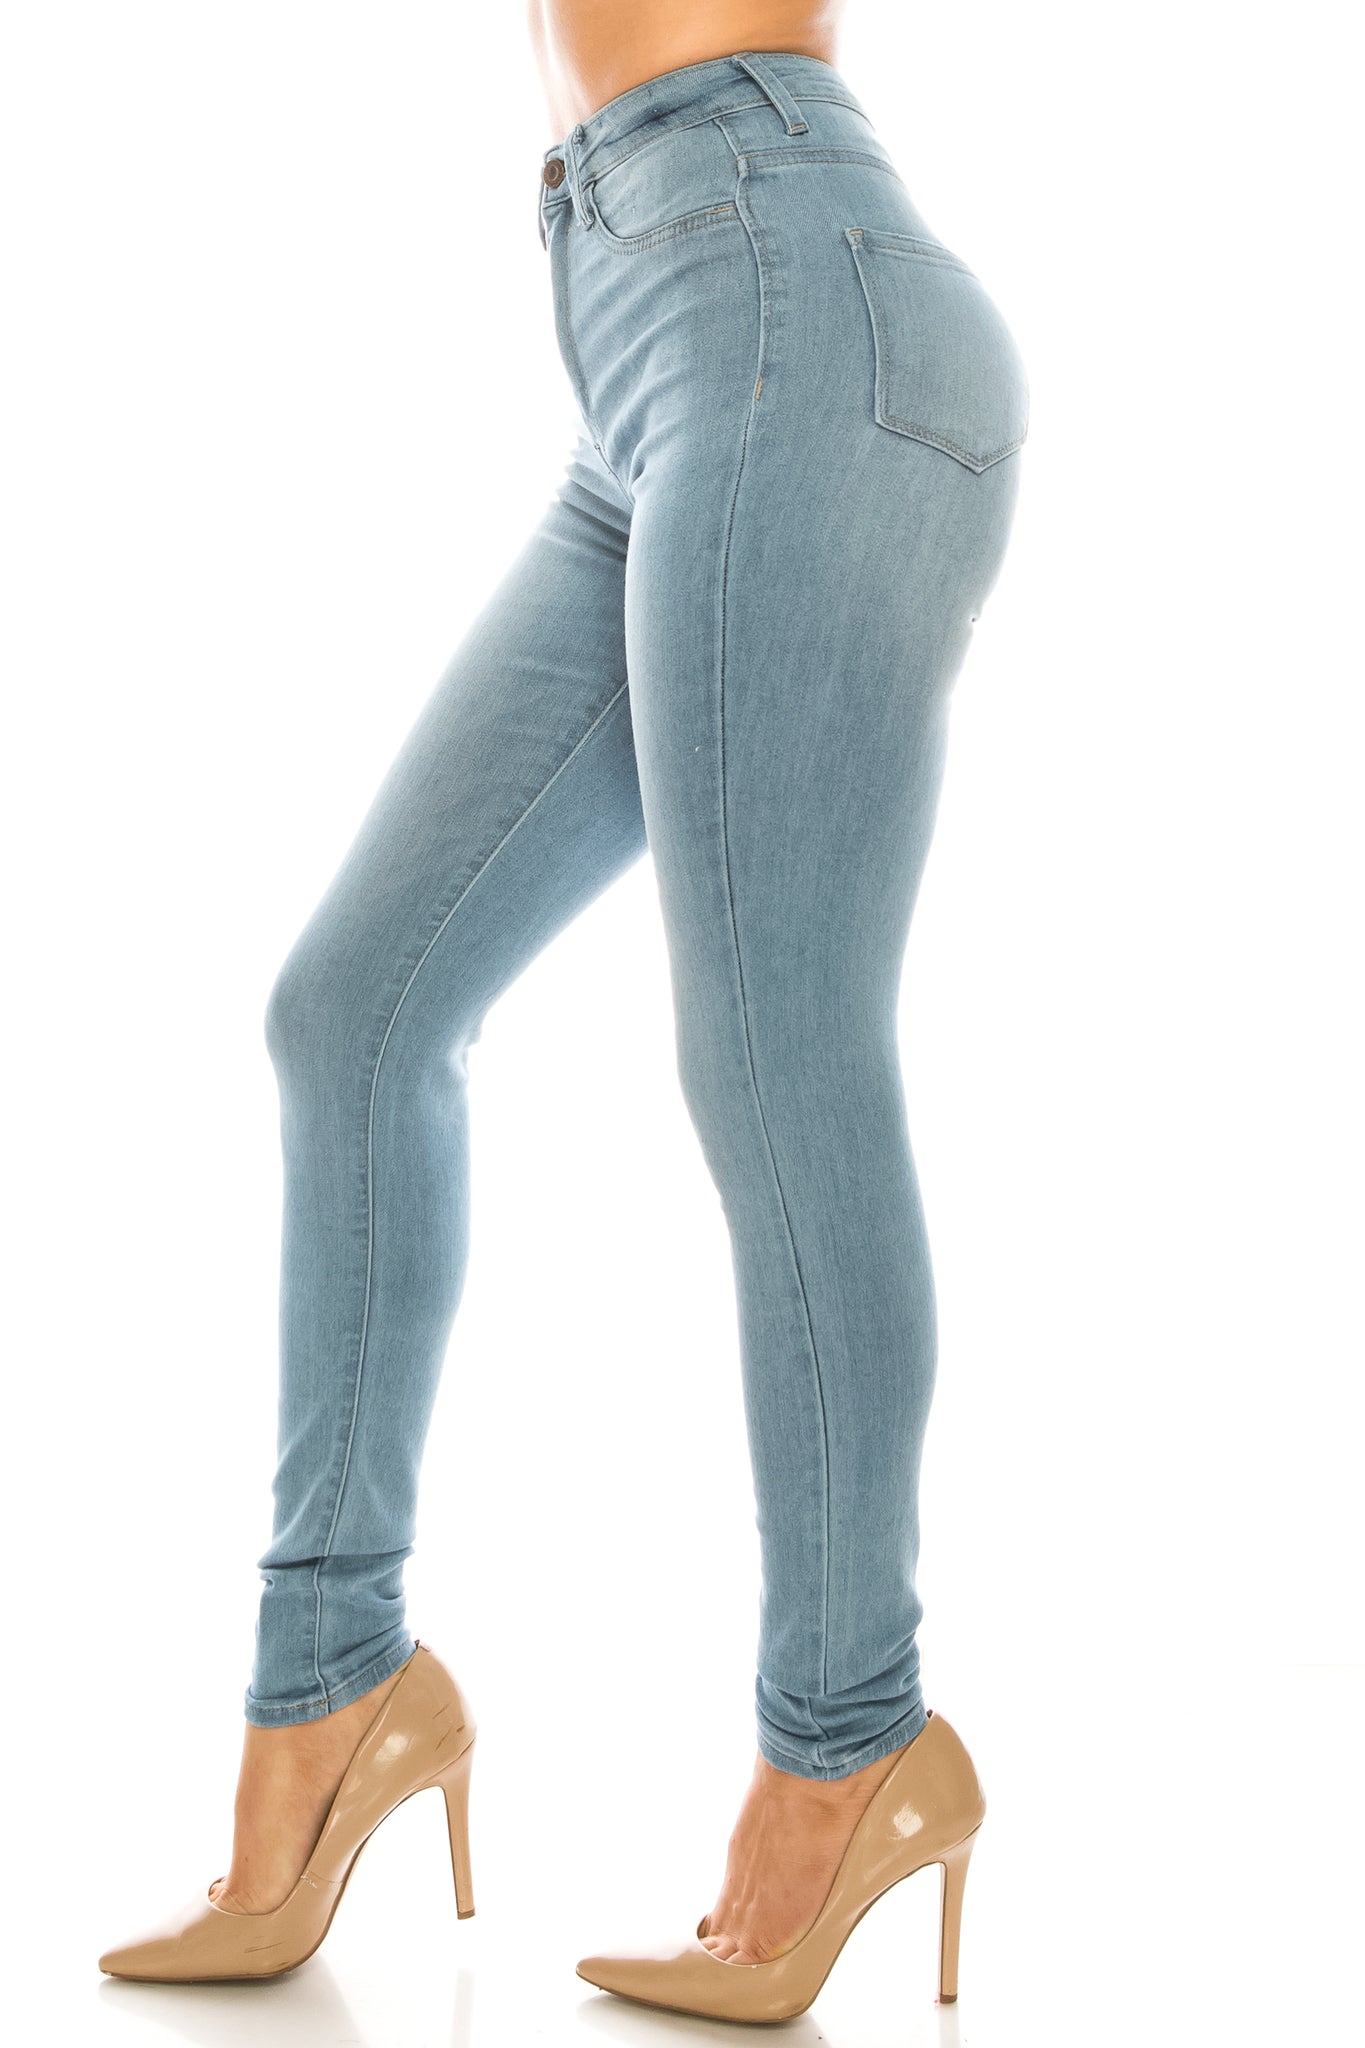 women full length skinny super high rise high waisted jeans pants